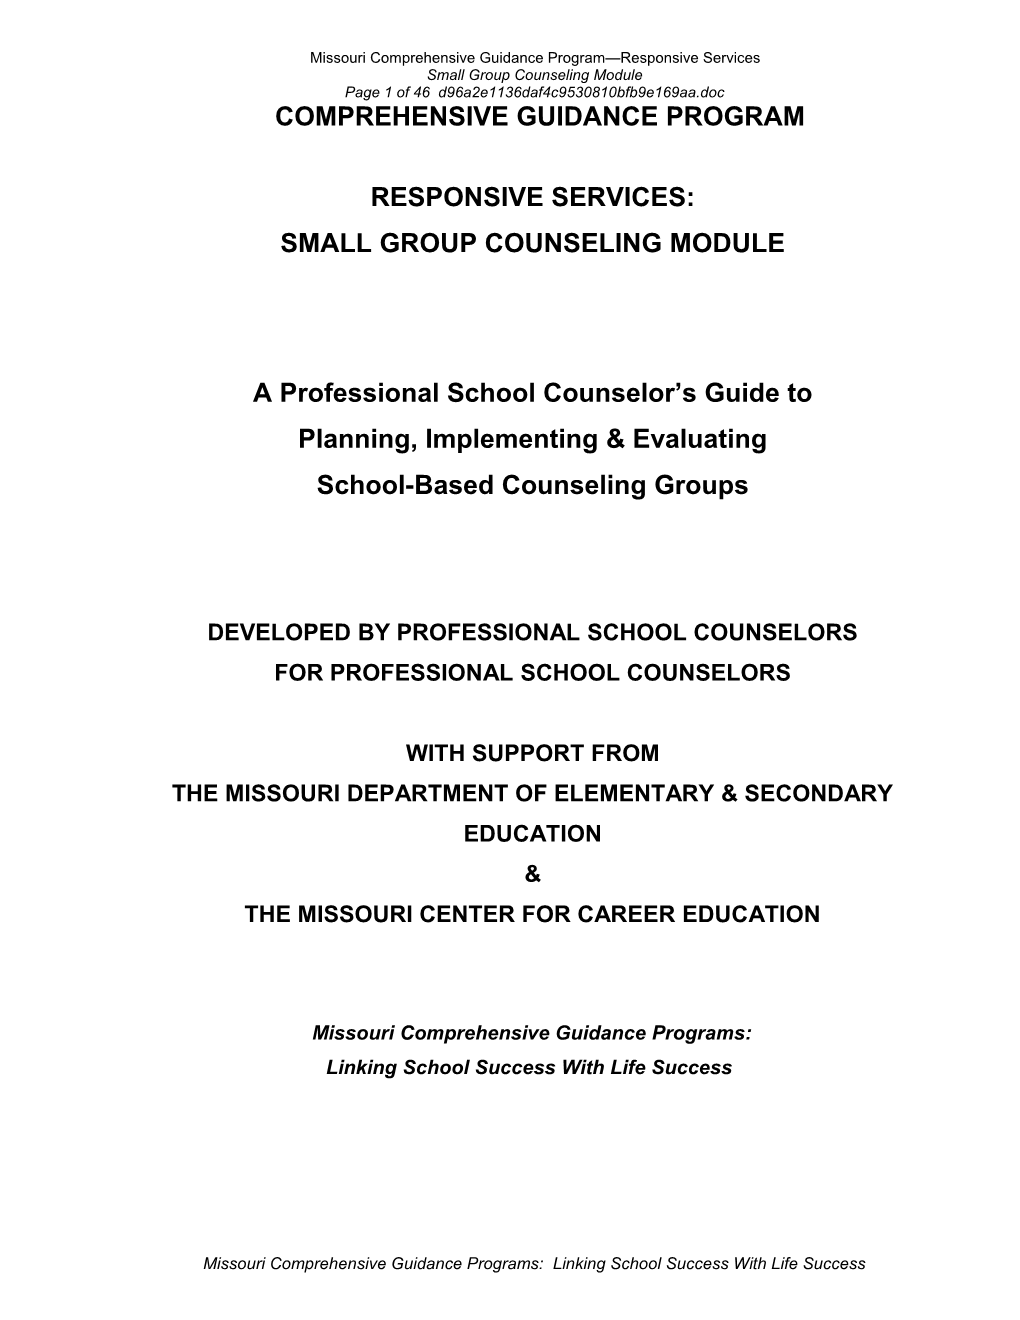 Missouri Comprehensive Guidance Program Responsive Services